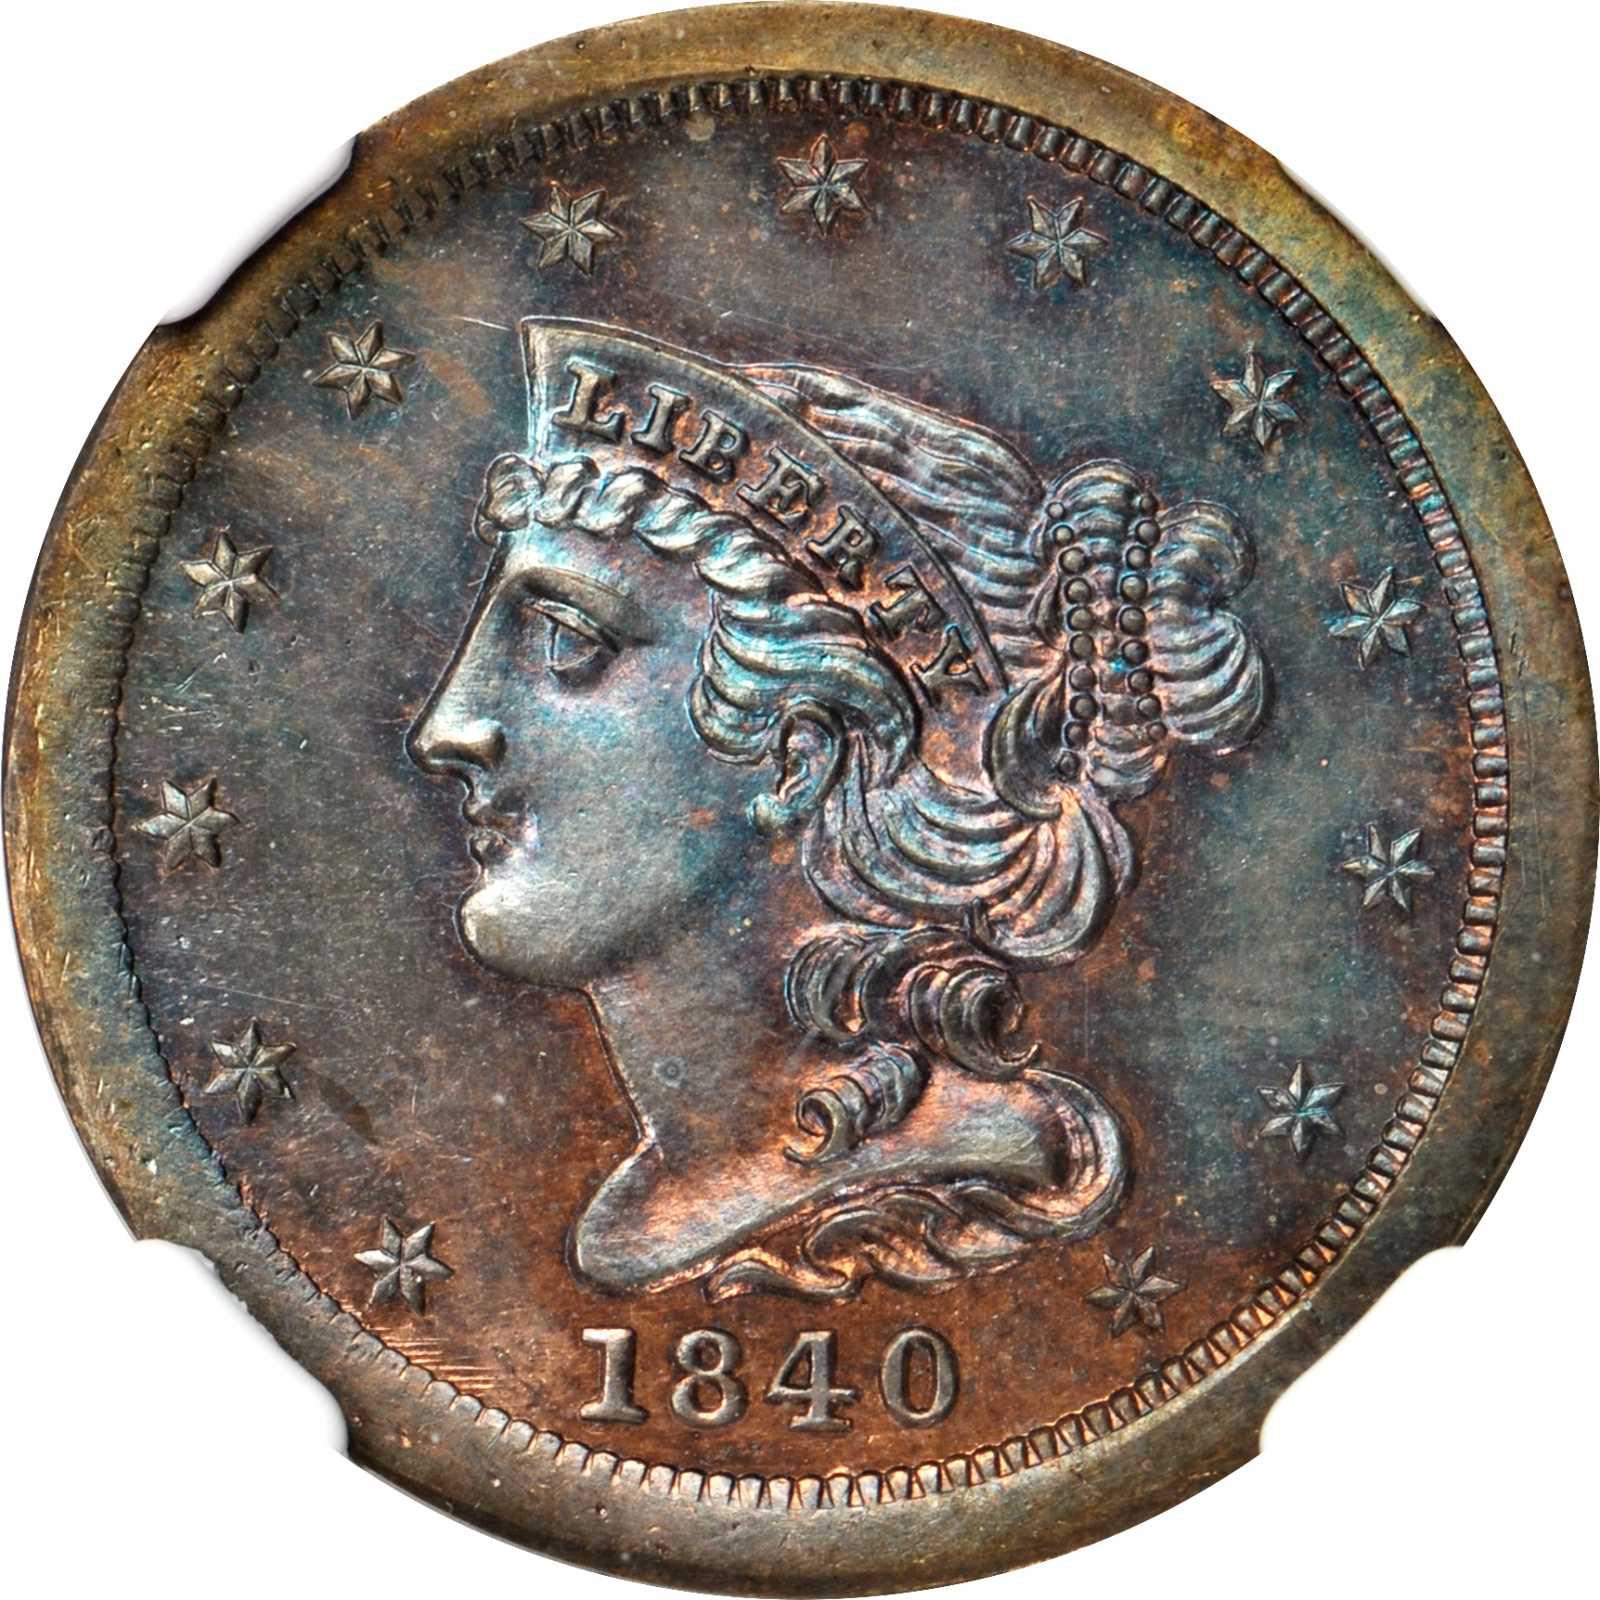 United States Braided Hair Half Cent coin, Coins